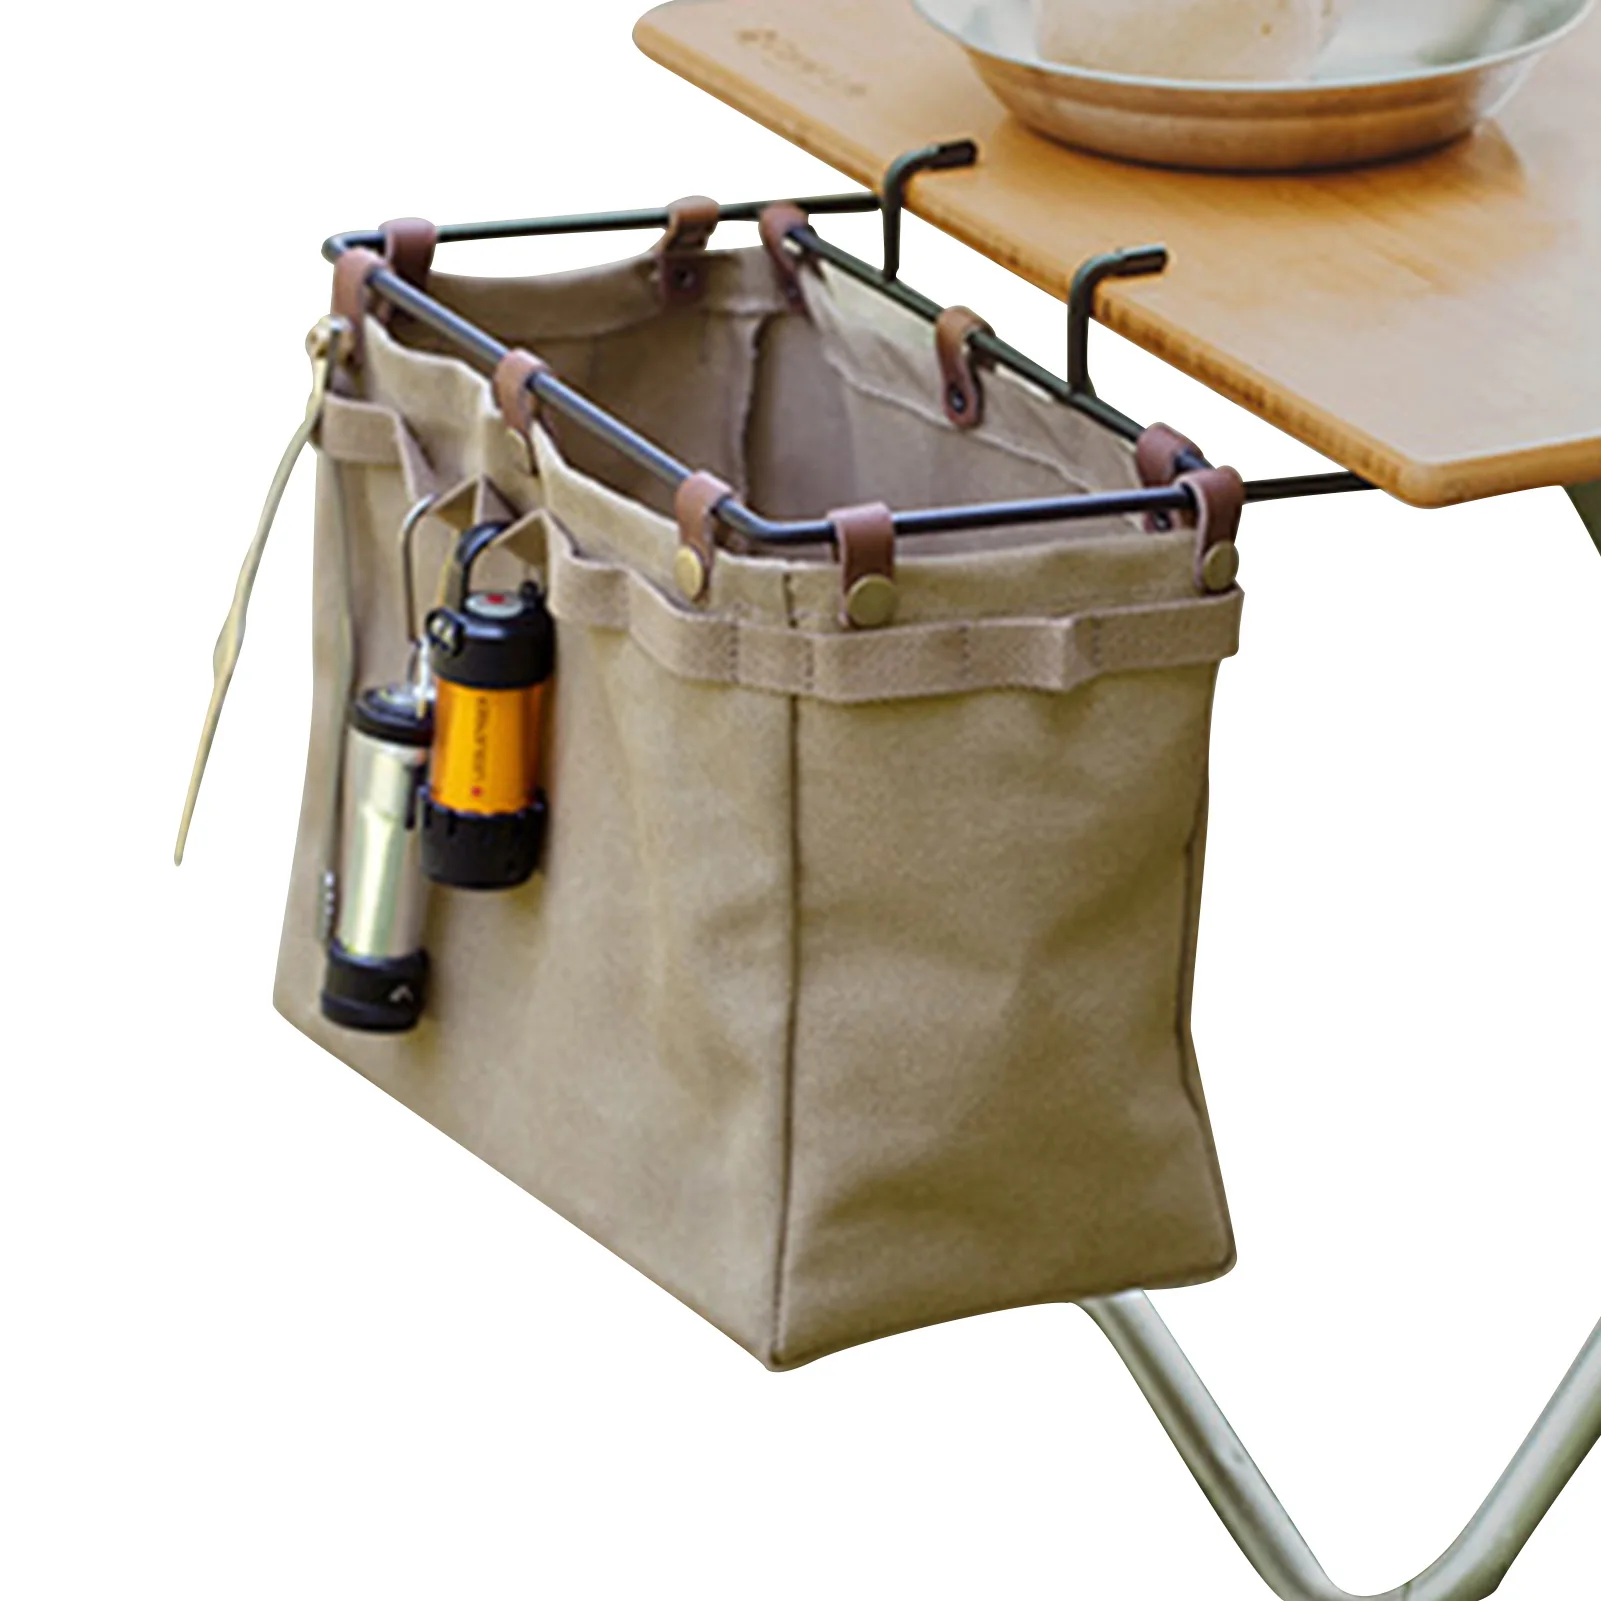 Camping Table Side Hangings Bag Picnic Desk Bag Organizer Deskside Bags Pouch With Slip Pocket Hard PP Board Support Suitable